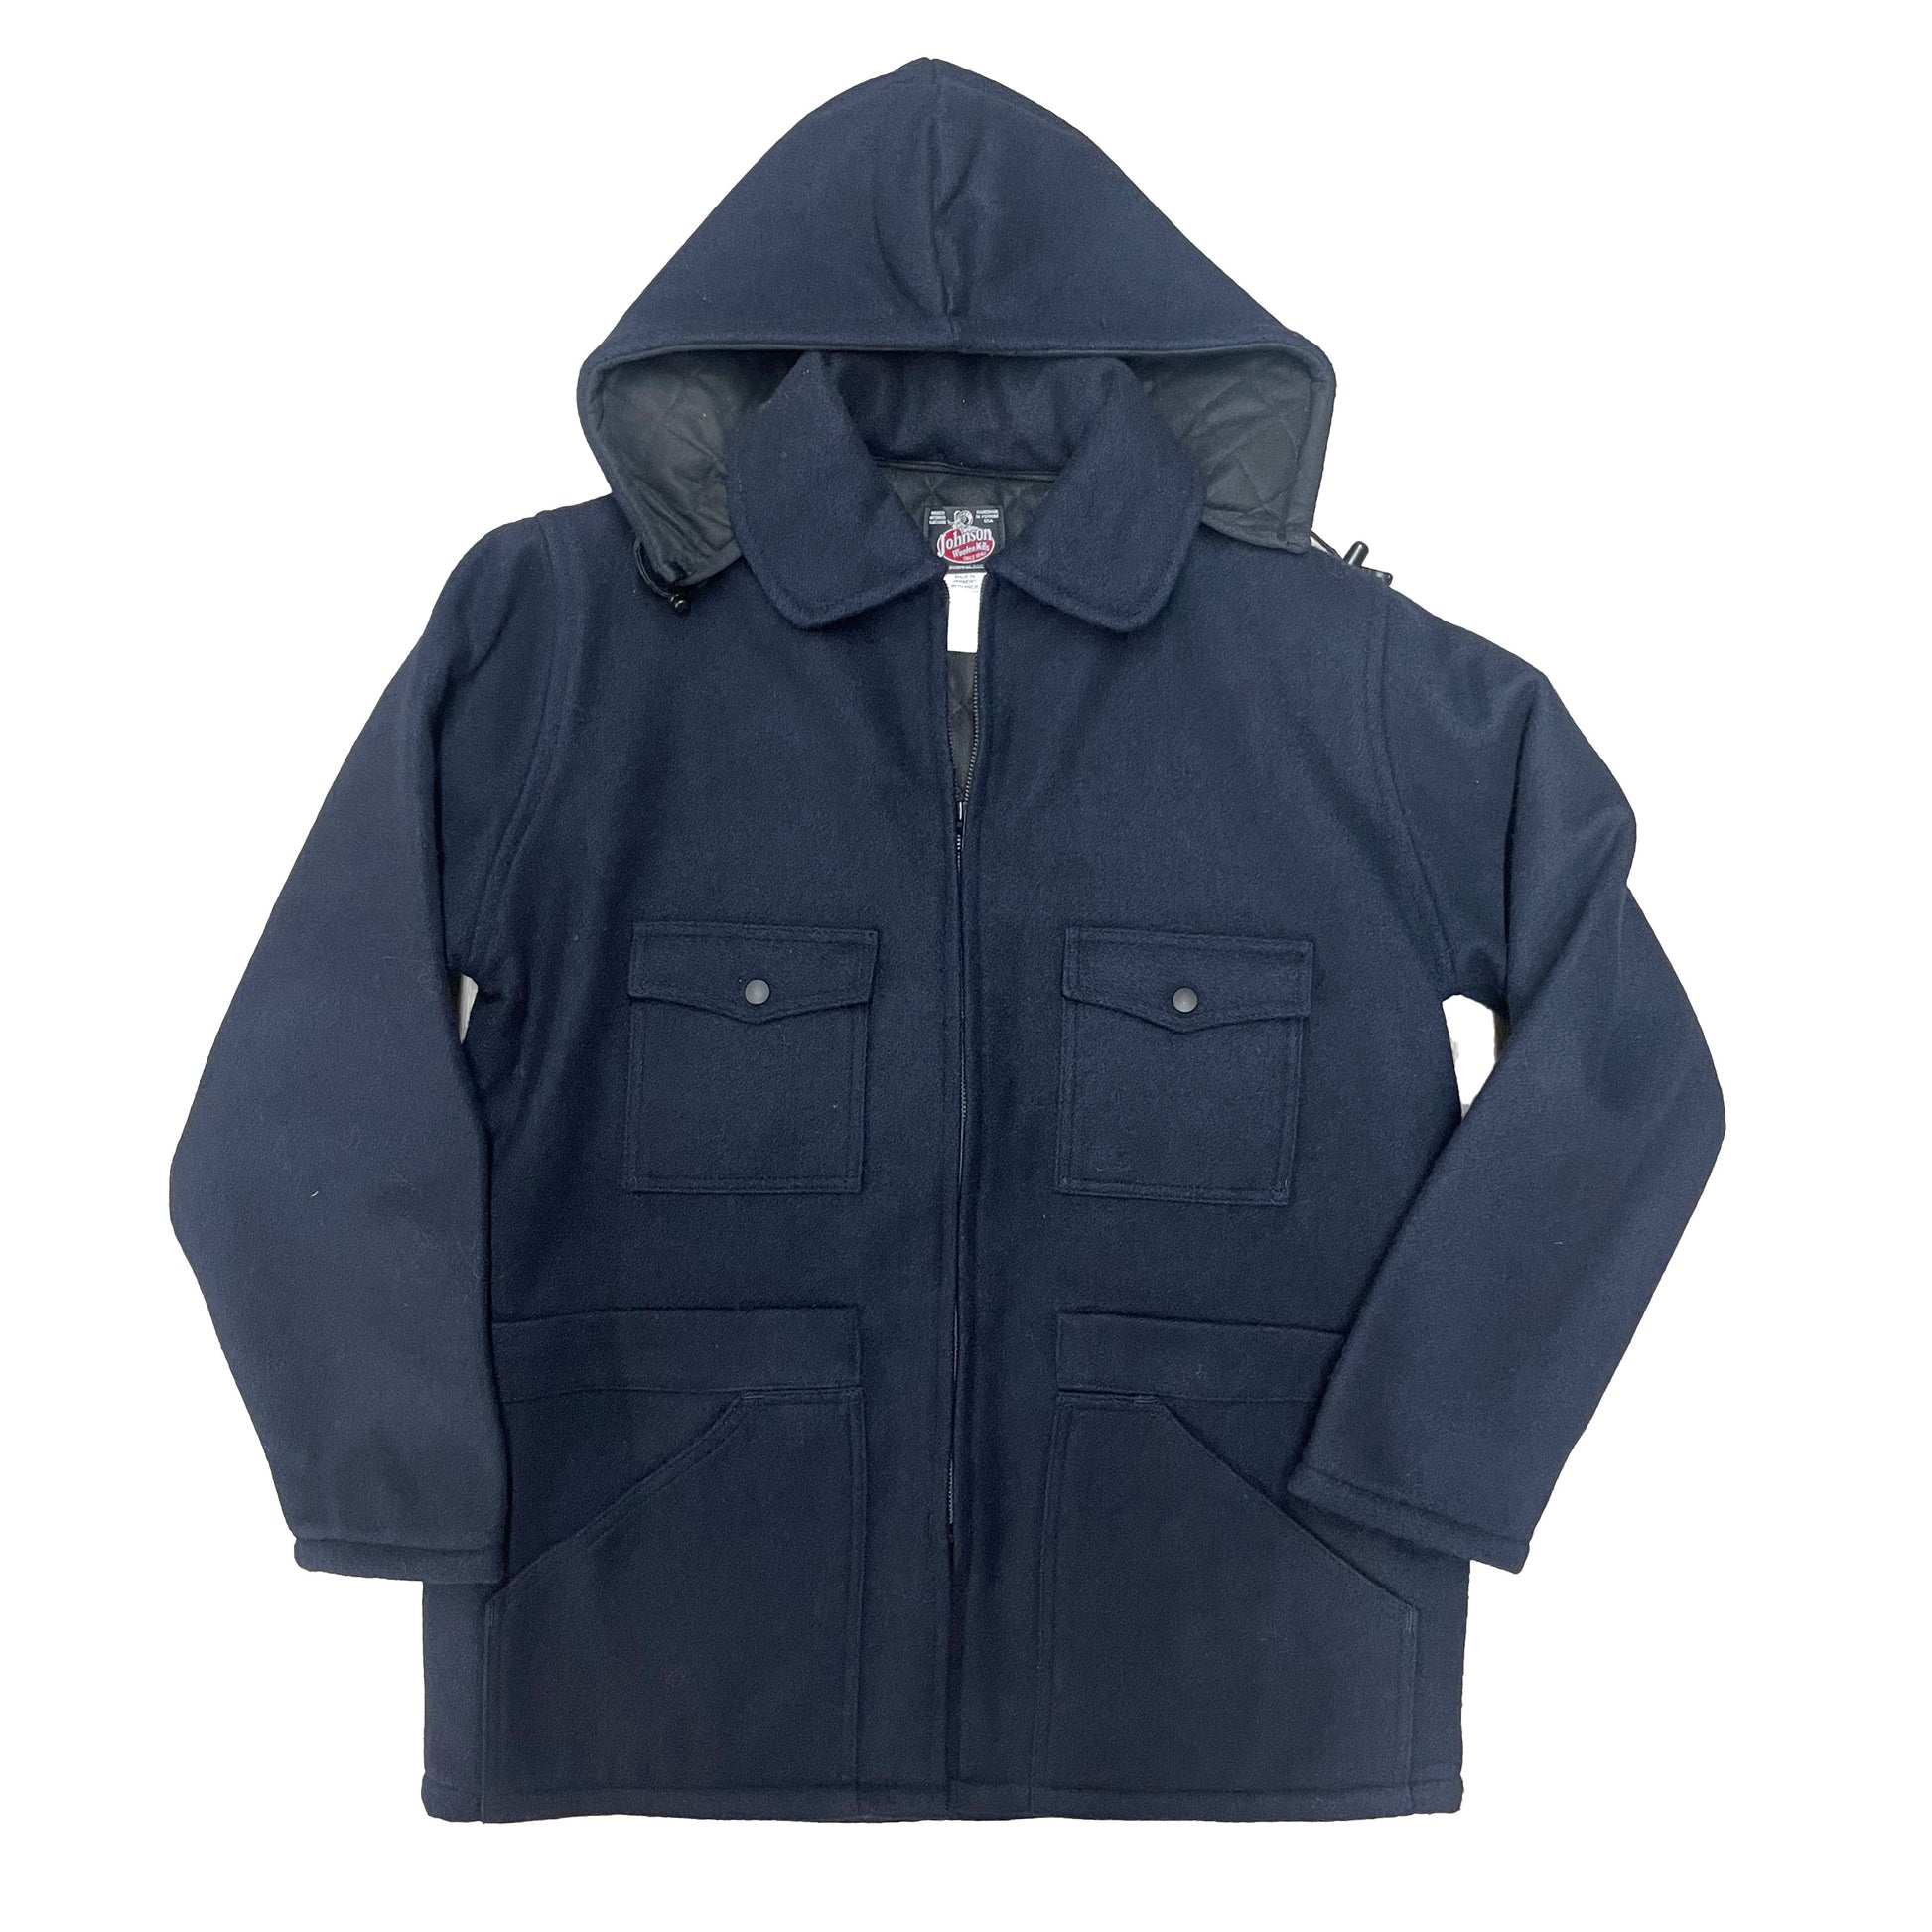 Johnson Woolen Mills Men's Lined Wool Jacket with Detachable Hood -Navy